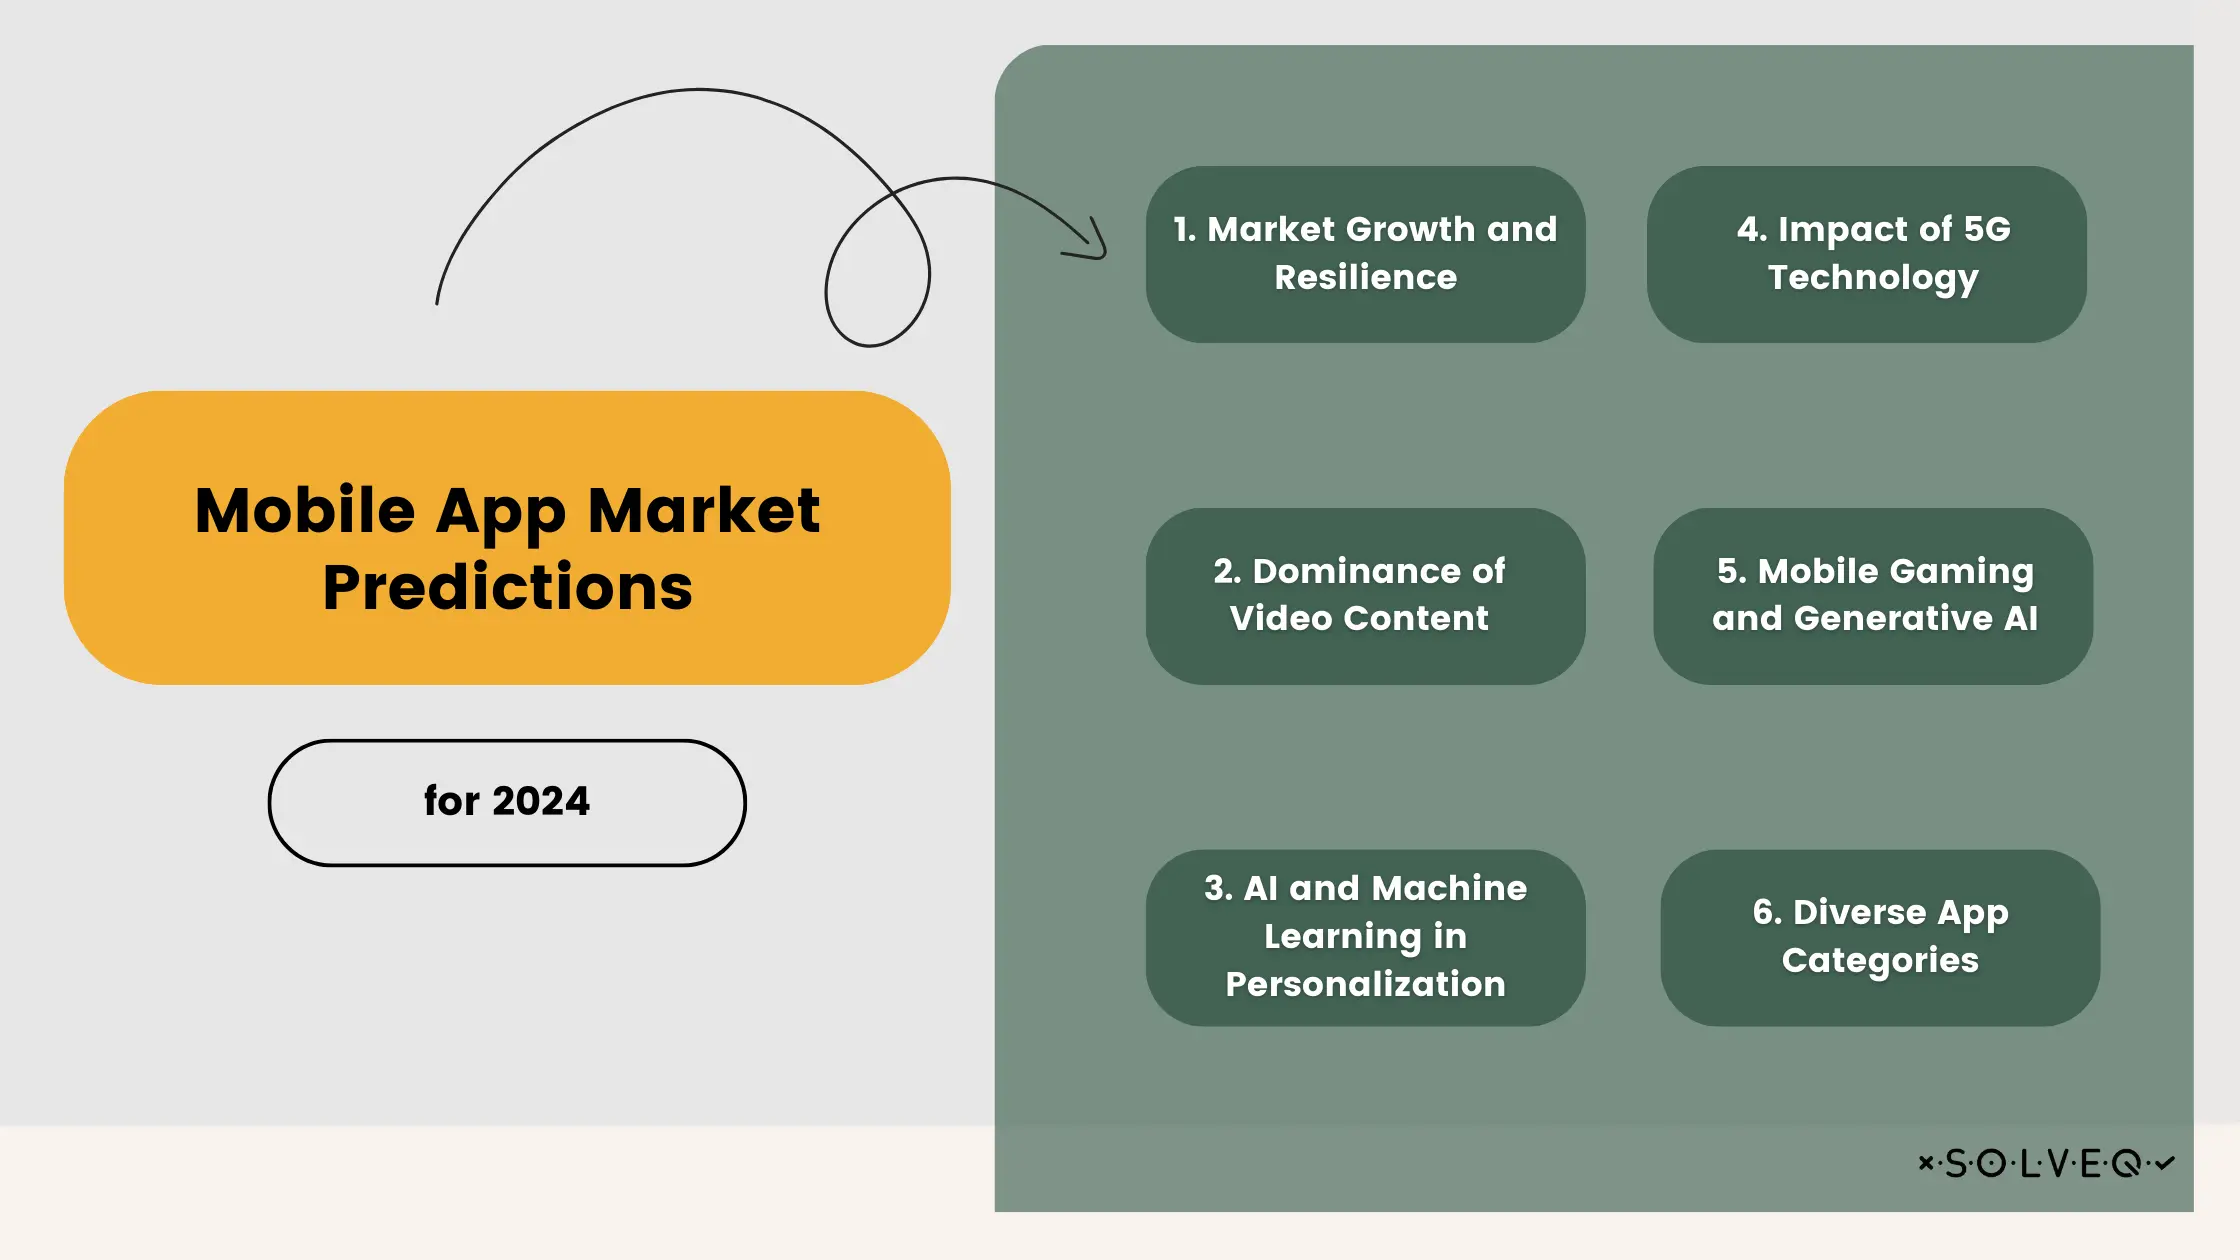 Mobile App Market Predictions for 2024